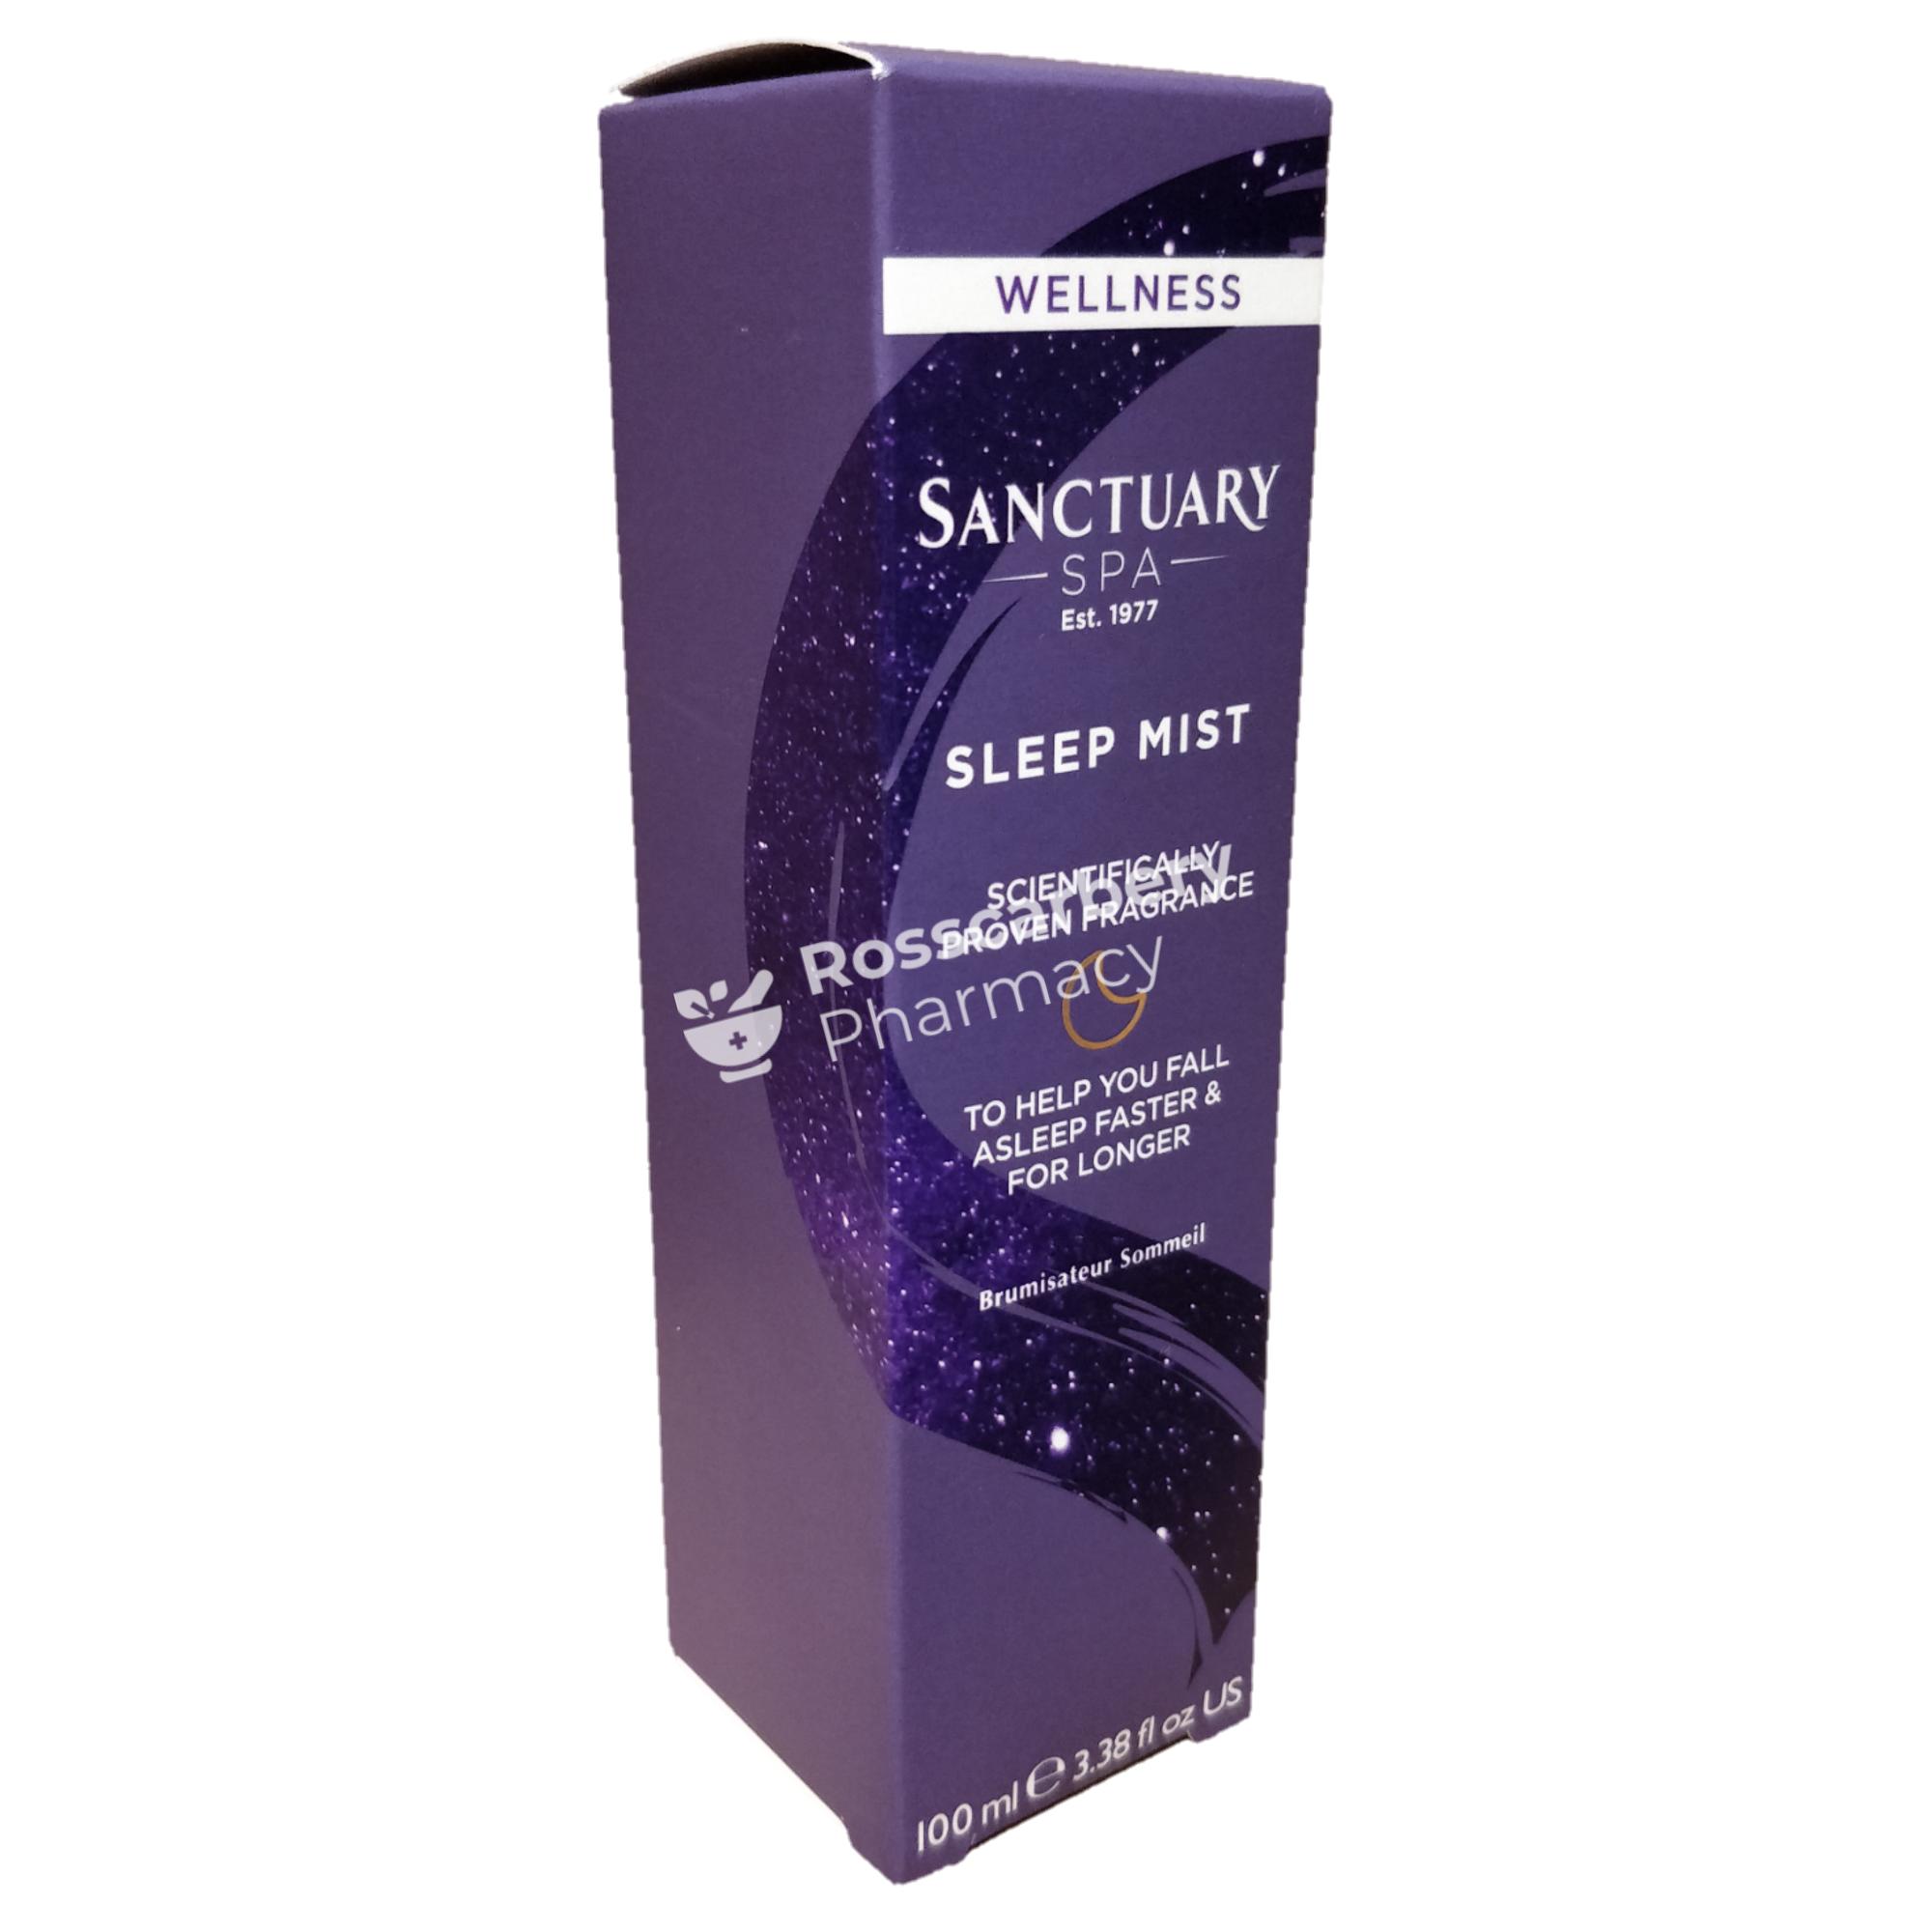 Sanctuary Spa Wellness Sleep Mist & Stress